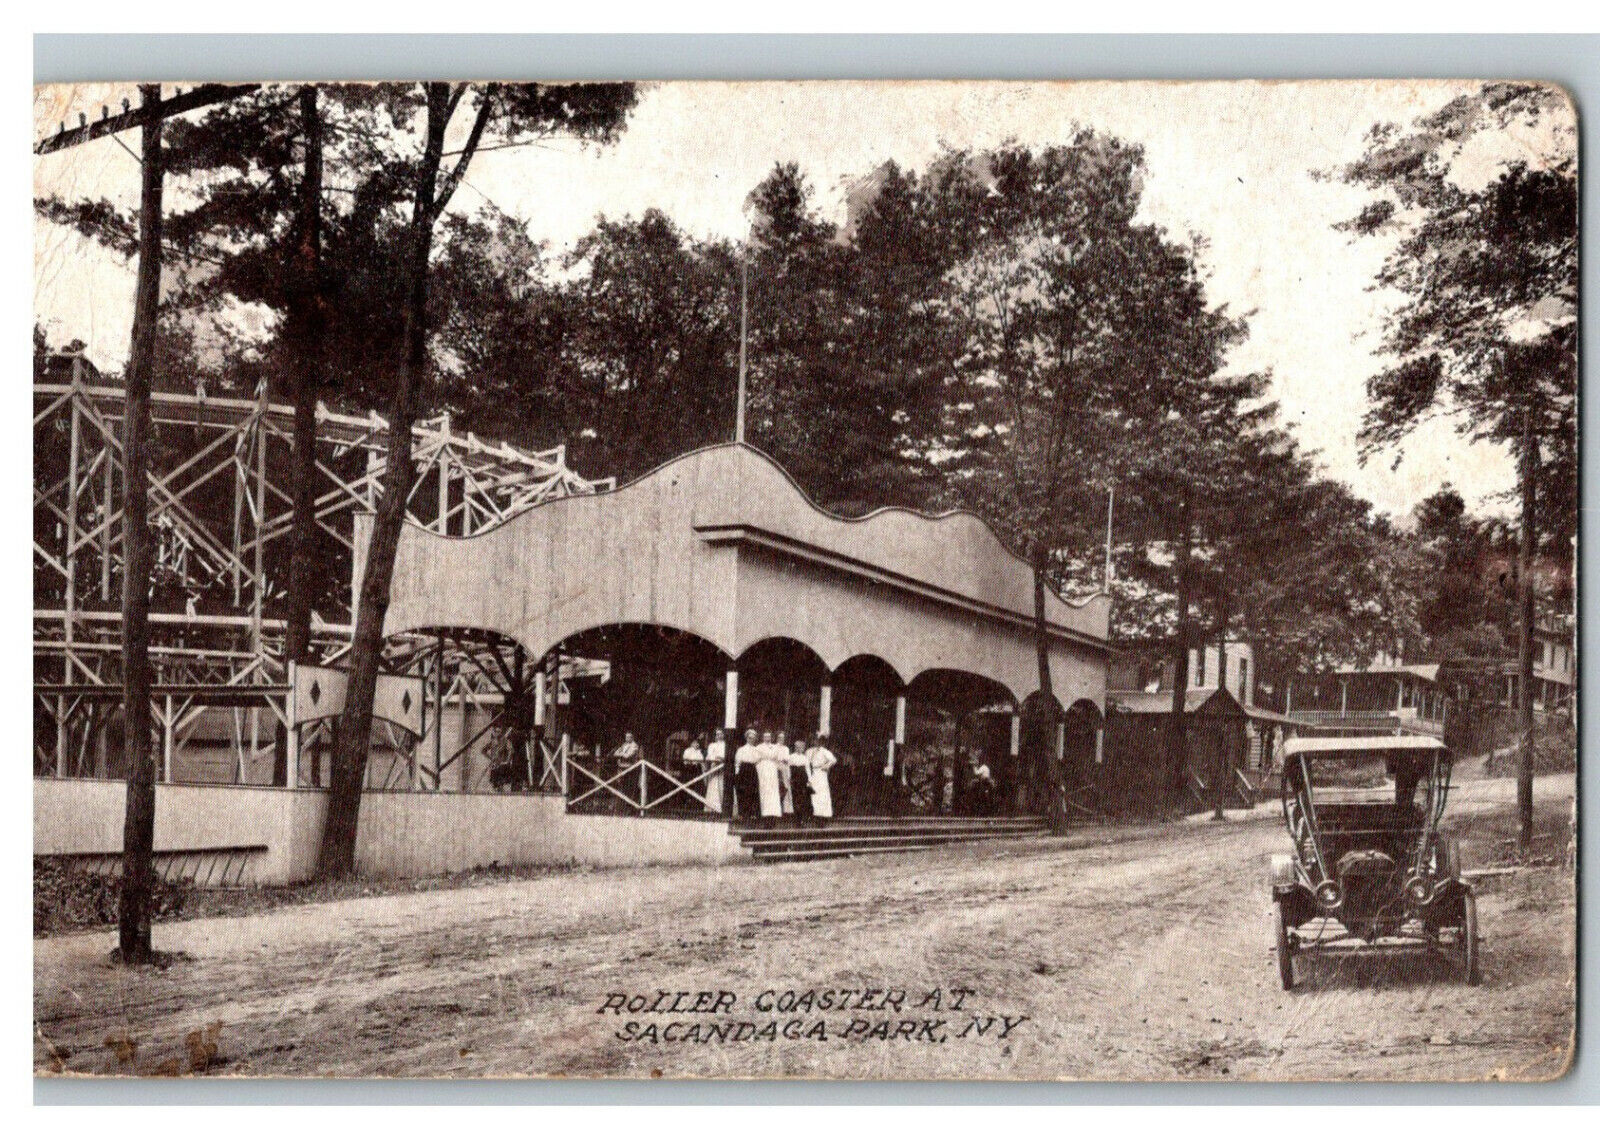 POSTCARD NY sacandaga park ROLLER Coaster Adirondacks amusement  1912 postmark